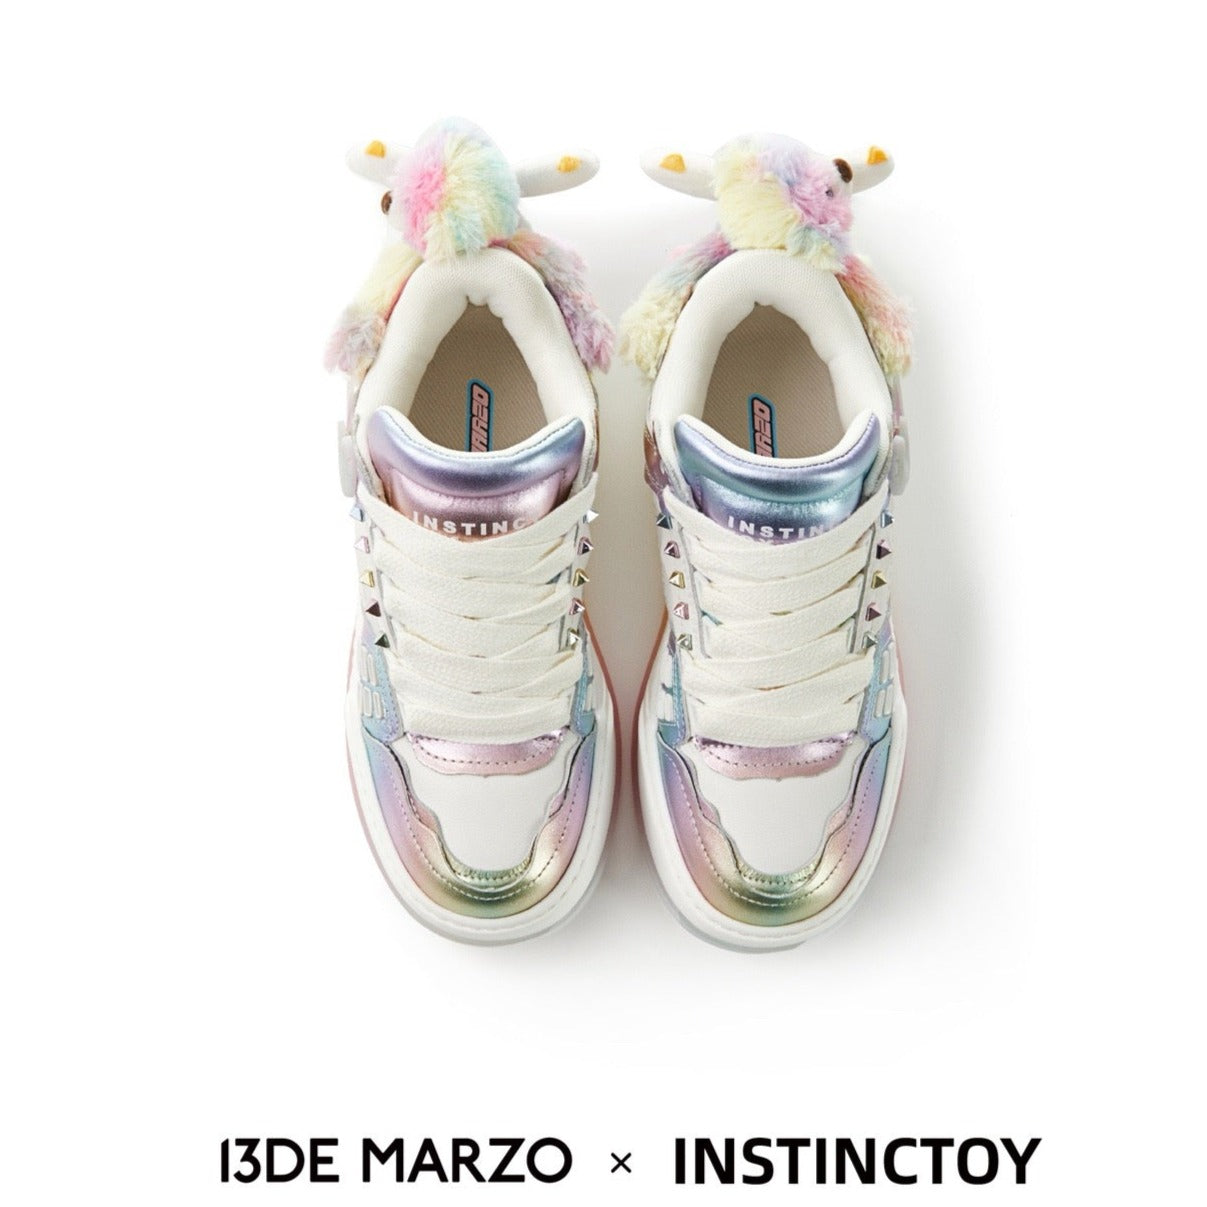 13DE MARZO x INSTINCTOY Crystal Erosion Bear Sneaker Illusion Fantasy